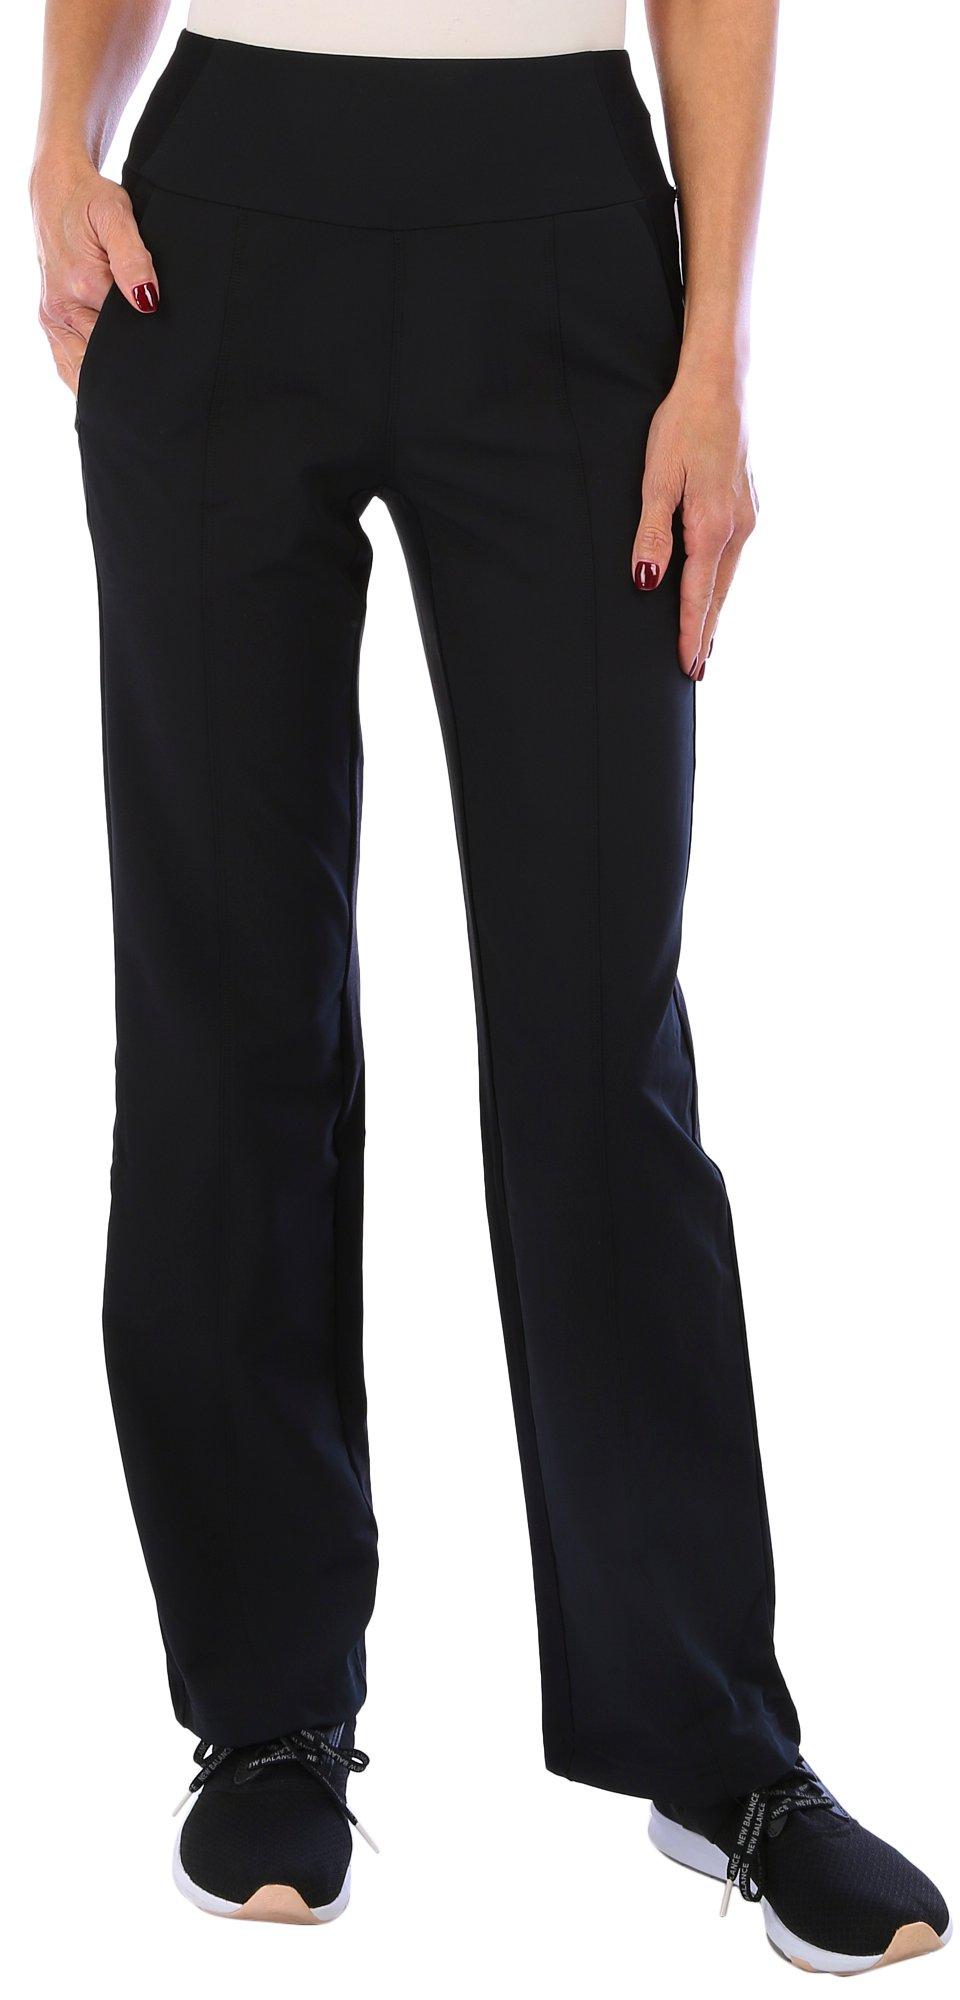 Avalanche Women's Pants~Blue~Slim Fit Hybrid Stretch Woven  Knit~CA701R5~Size XL